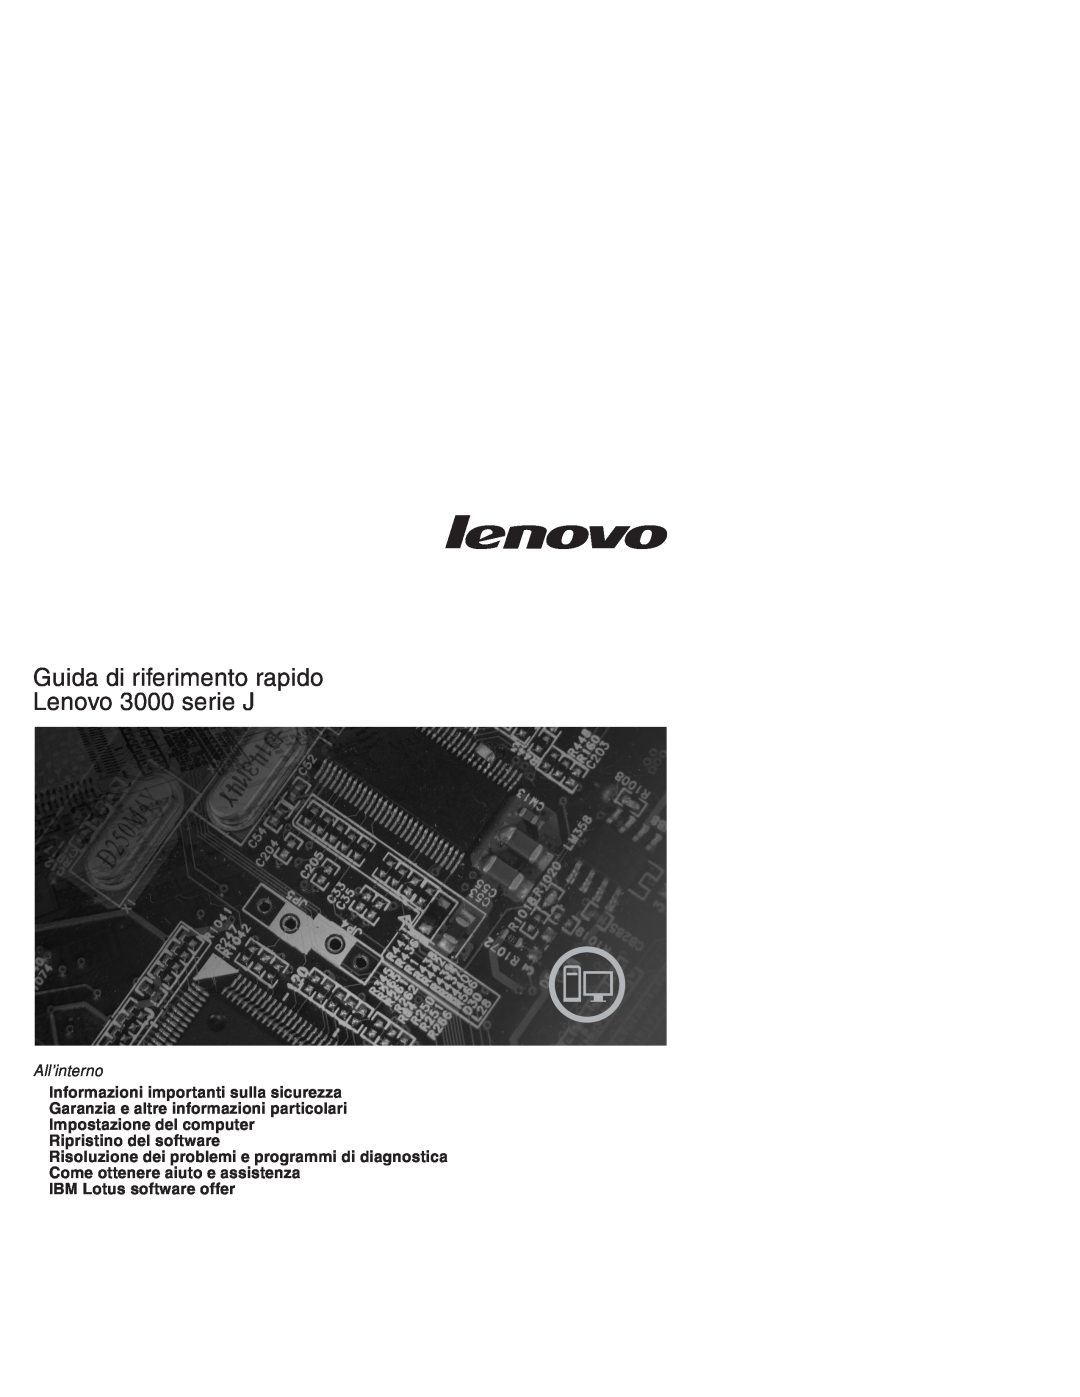 Lenovo 3000 SERIE J manual IBM Lotus software offer, Guida di riferimento rapido Lenovo 3000 serie J, All’interno 